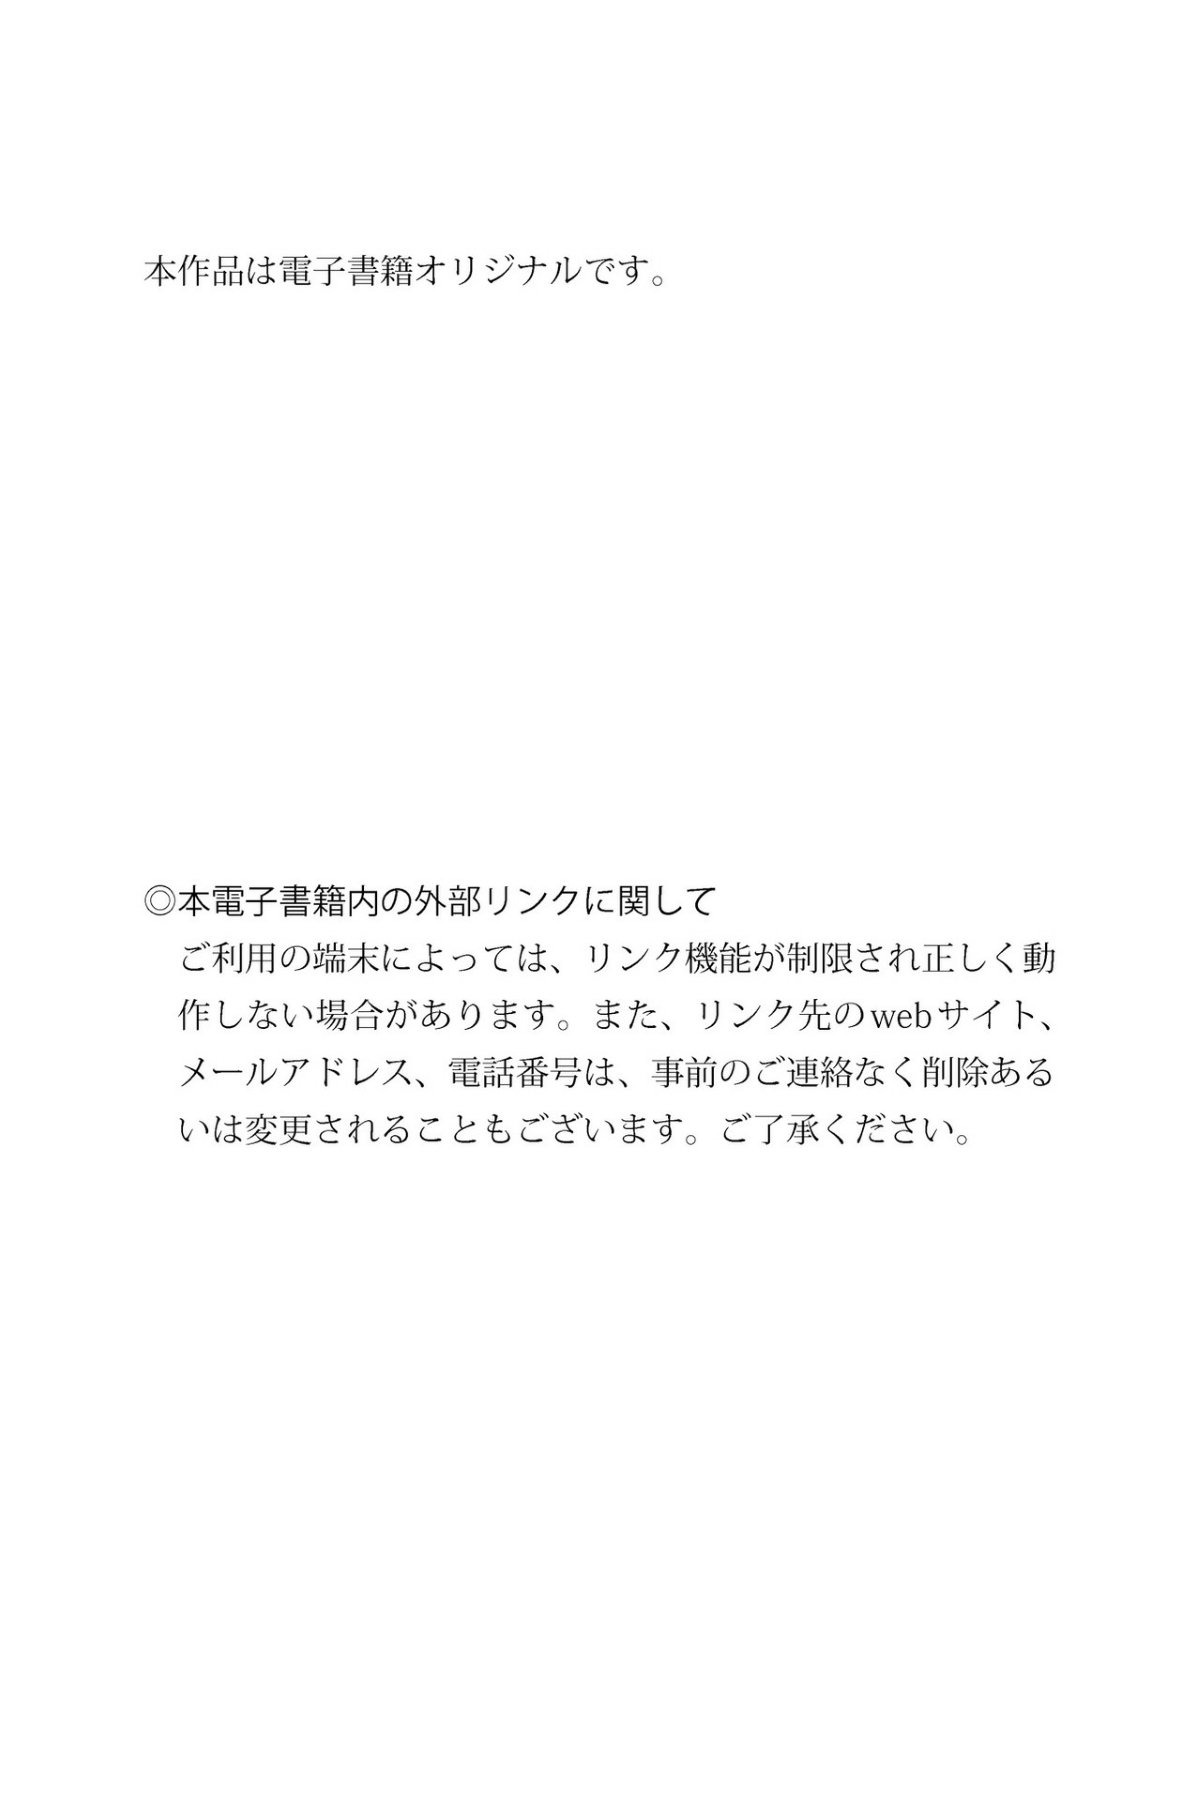 FRIDAY Digital Photobook Asahi Mizuno 水野朝陽 Aphrodisiac ripe BODY Vol 2 媚薬の完熟BODY Vol 2 2021 12 03 0058 3274598175.jpg